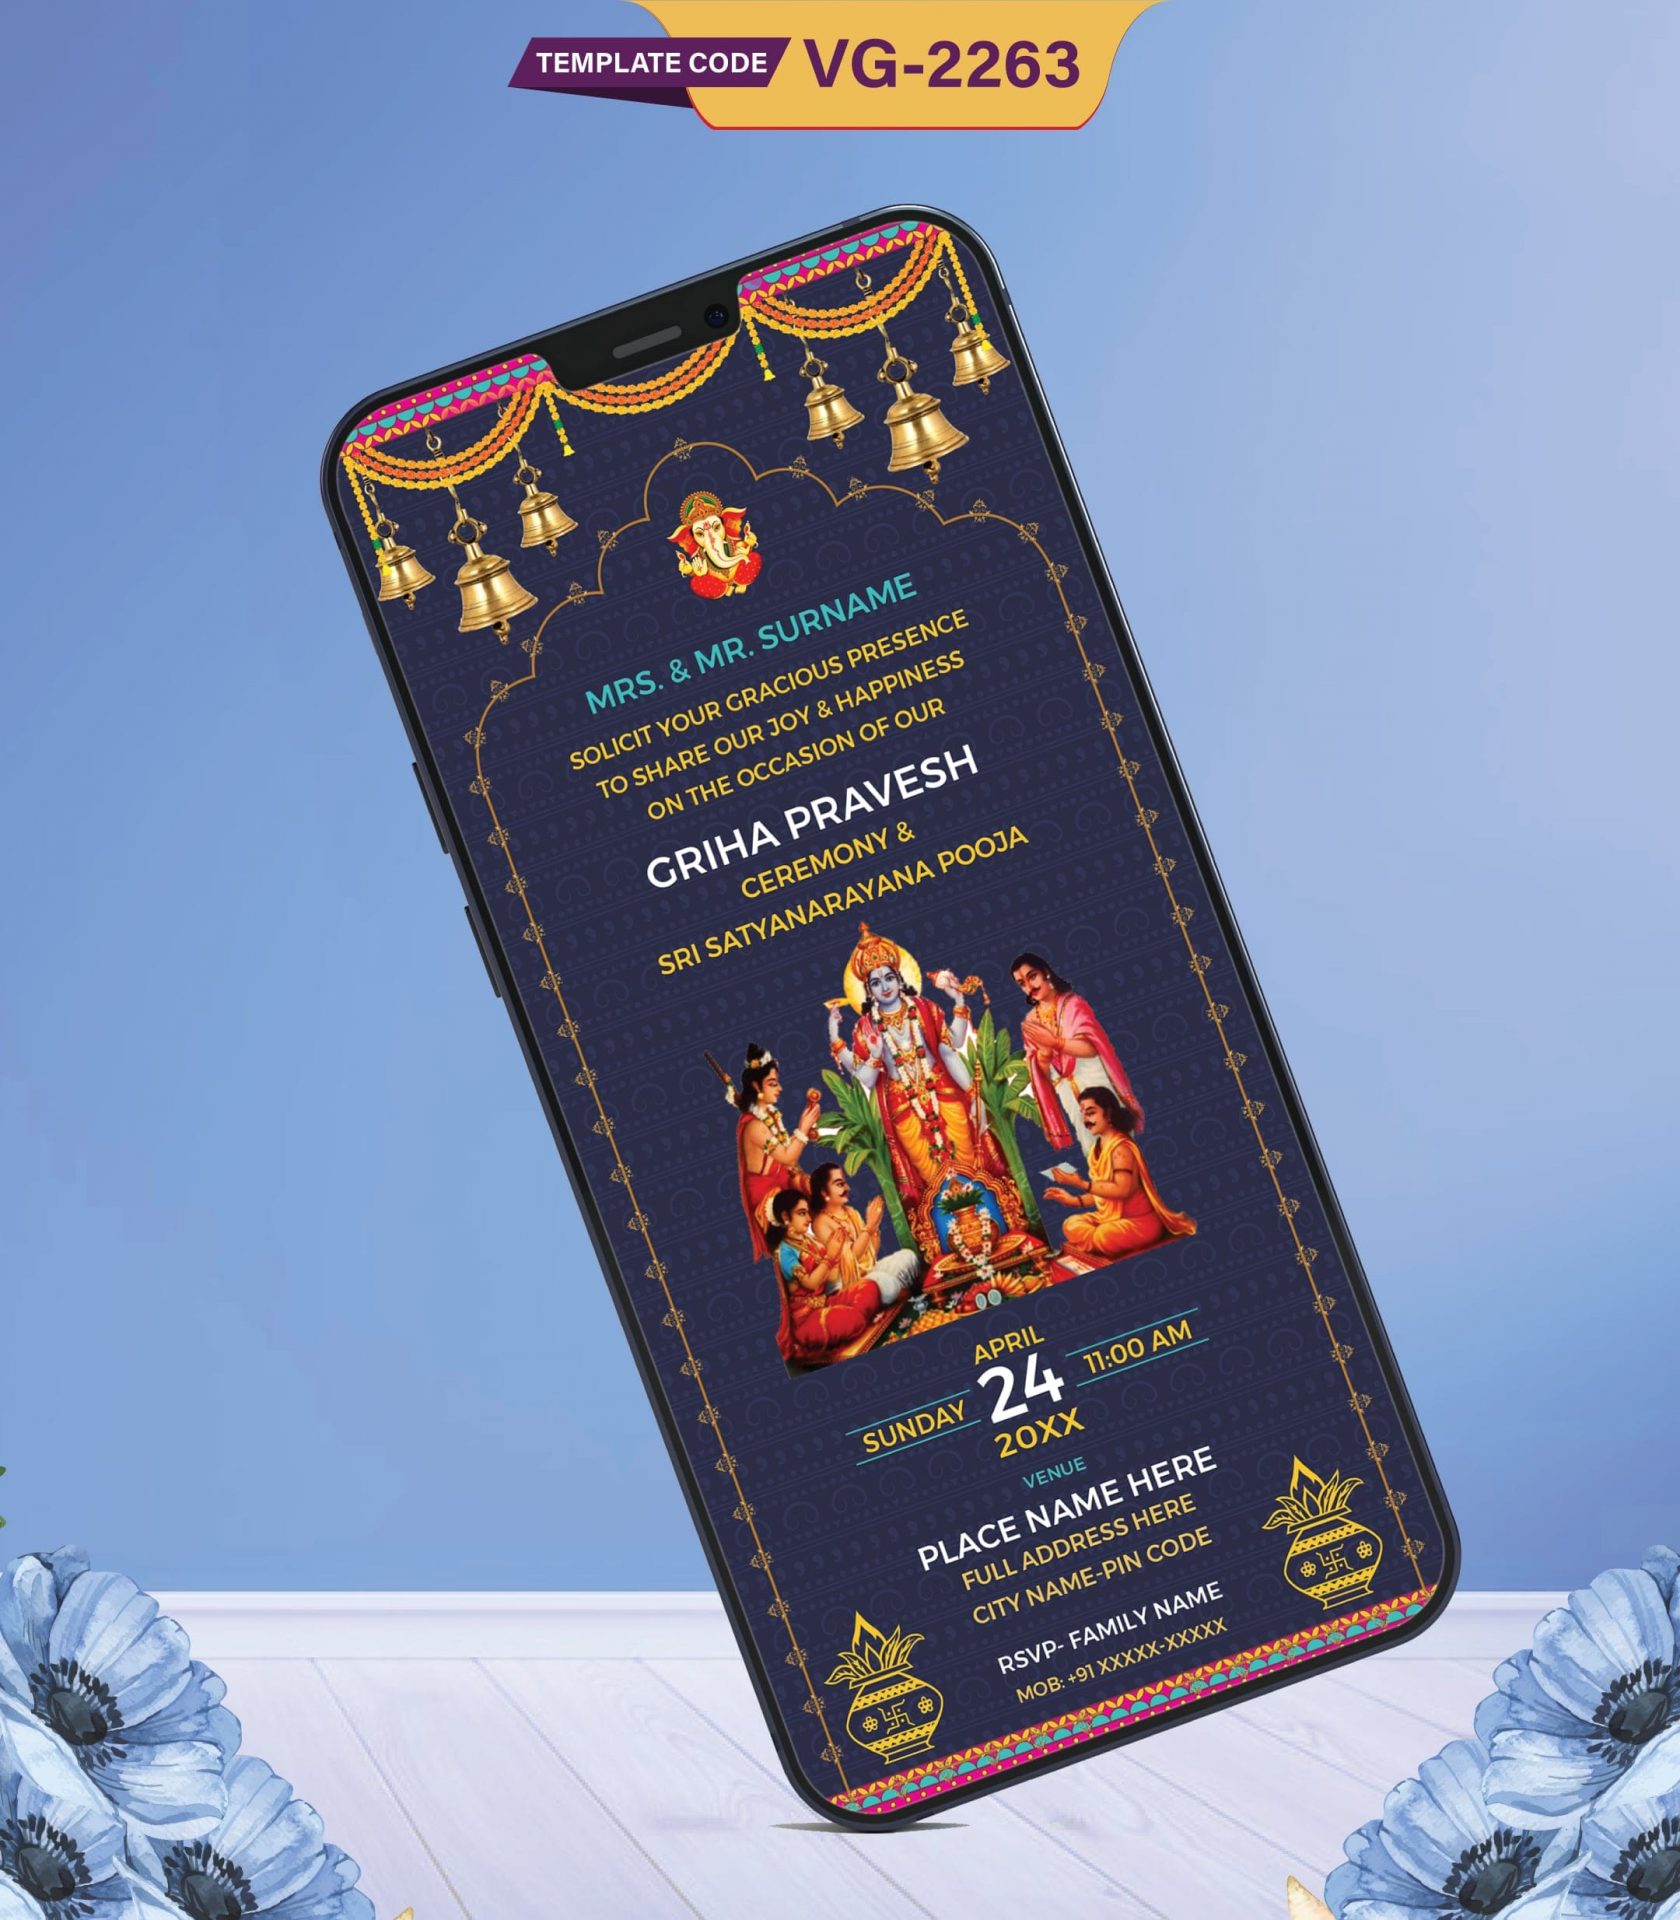 Grihapravesh And Satyanarayan Puja Invitation